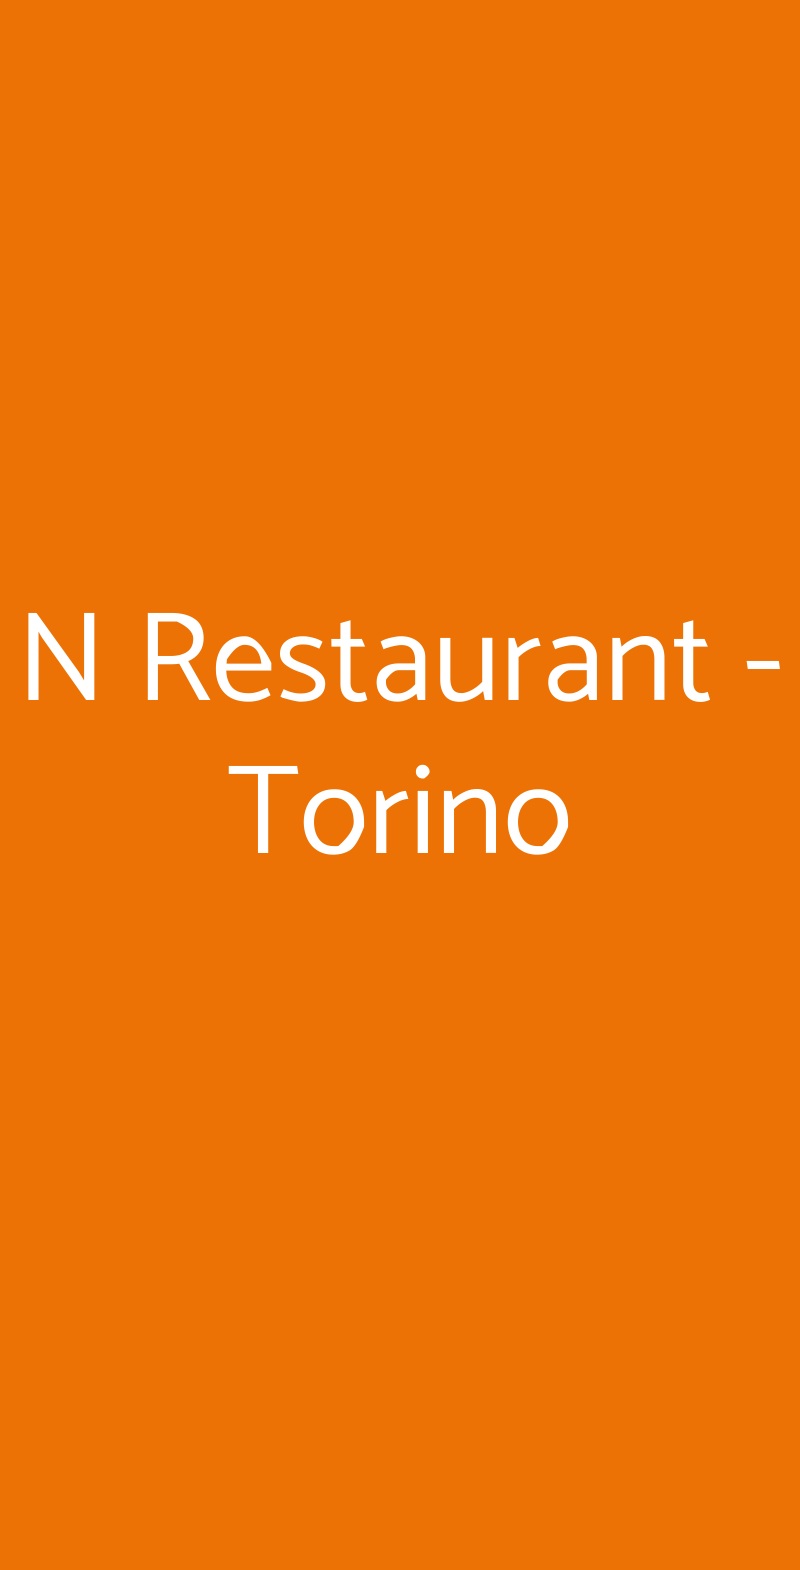 N Restaurant - Torino Torino menù 1 pagina